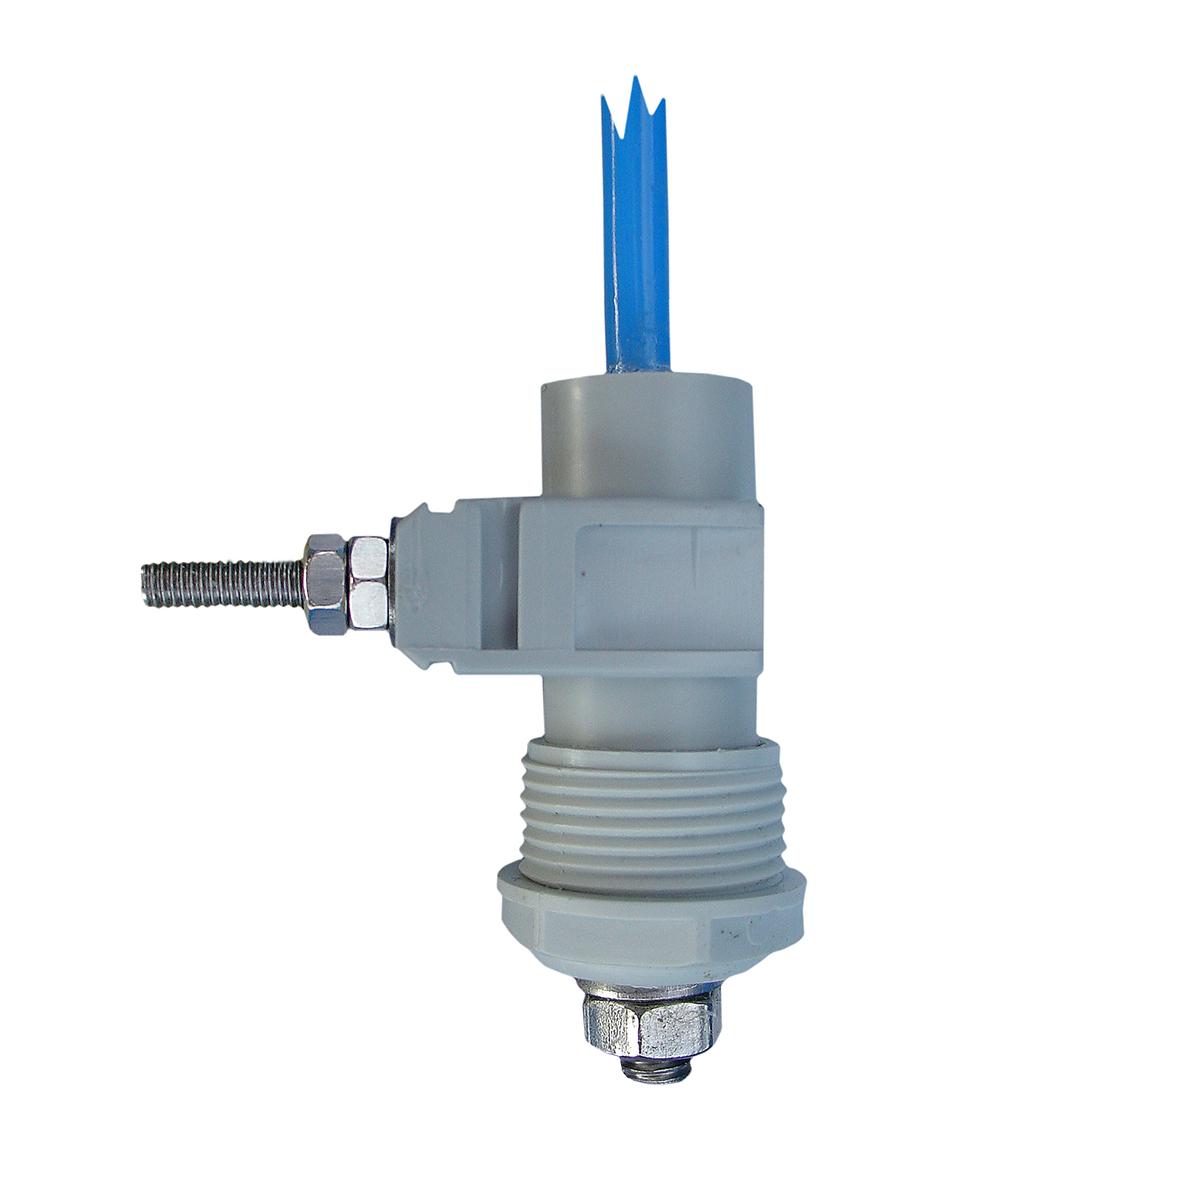 Galvanic water level sensor plastic/V4a, height adjustable, 20m cable Galvanic water level sensor plastic/V4a, height adjustable, 20m cable